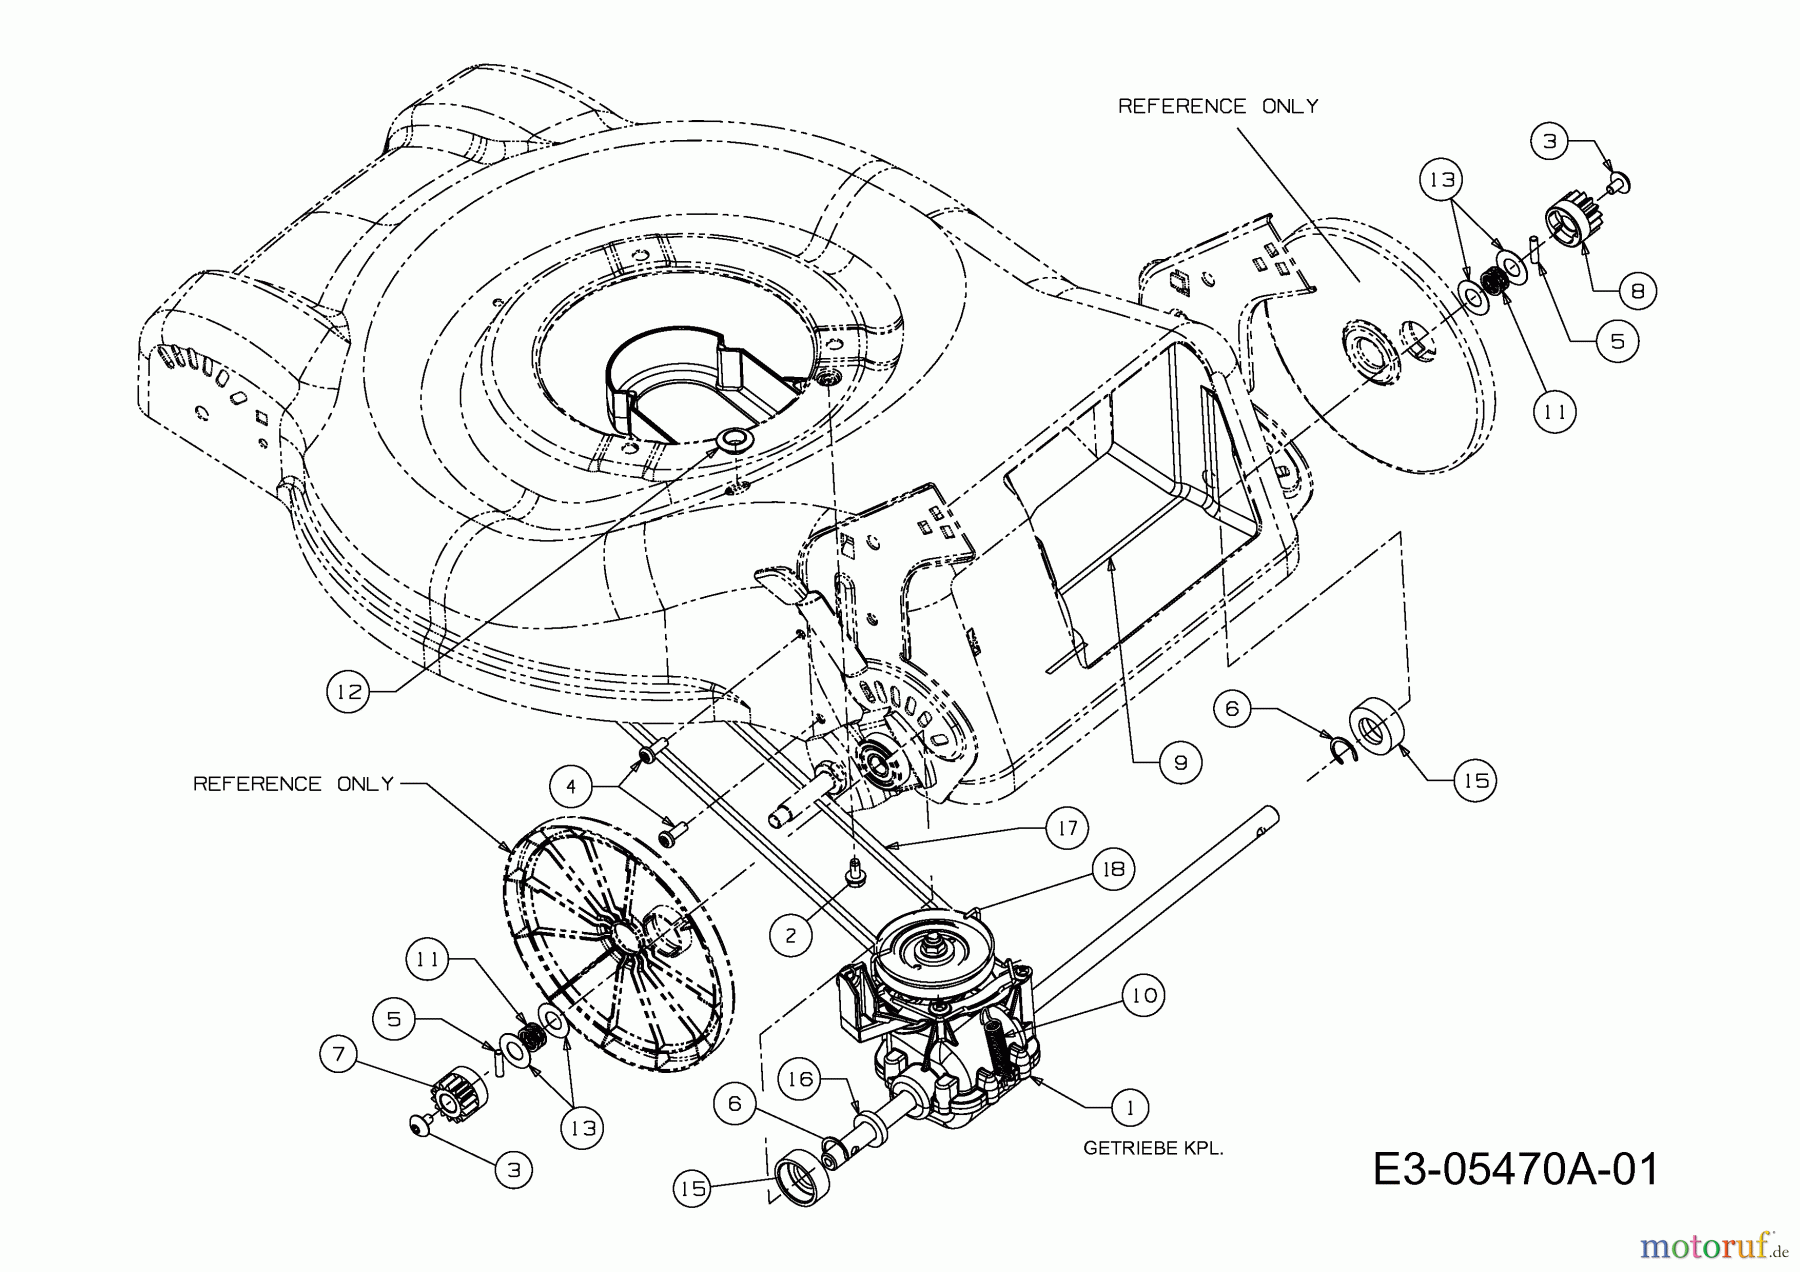  M Tech Motormäher mit Antrieb M 4645 SP 12D-J2M2605  (2010) Getriebe